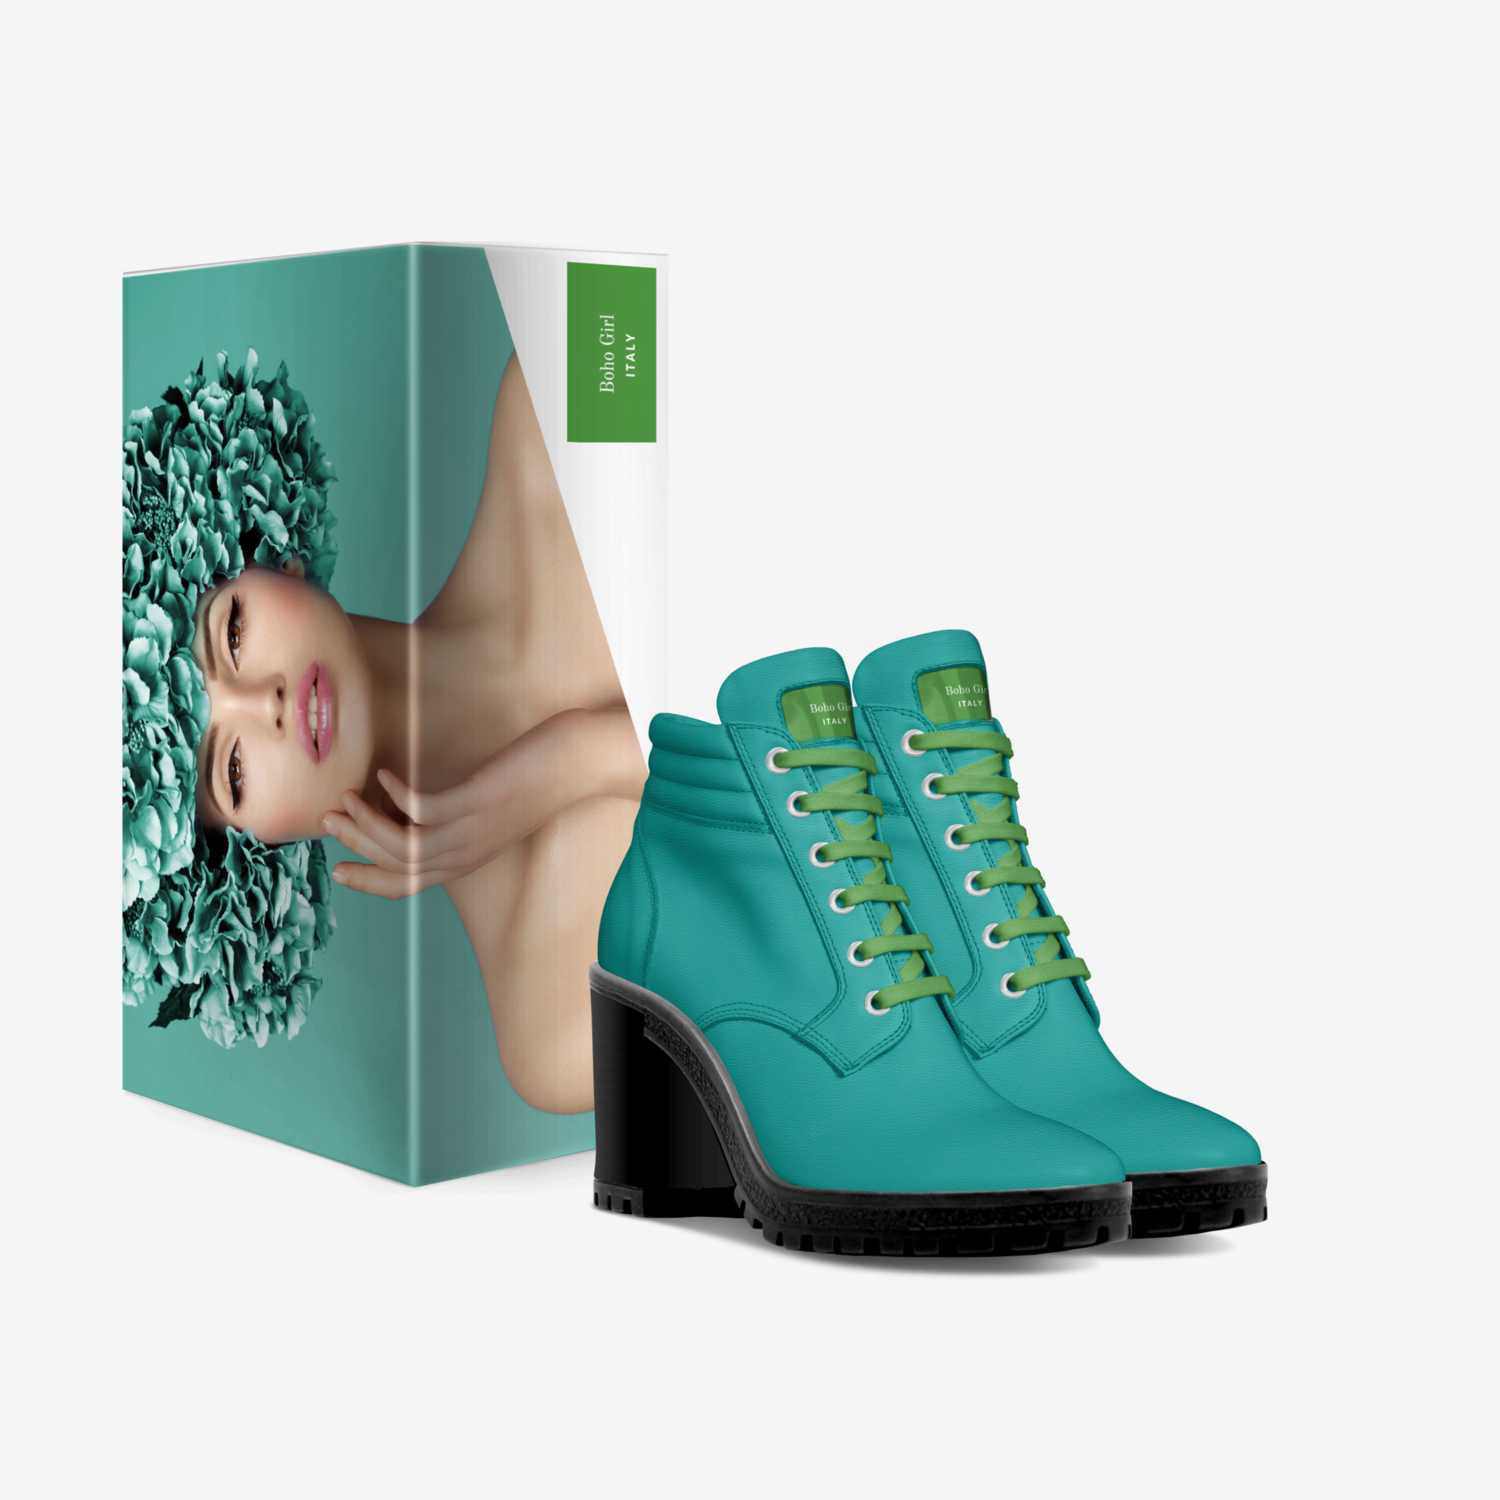 Boho Girl custom made in Italy shoes by Marijke Verkerk Design | Box view